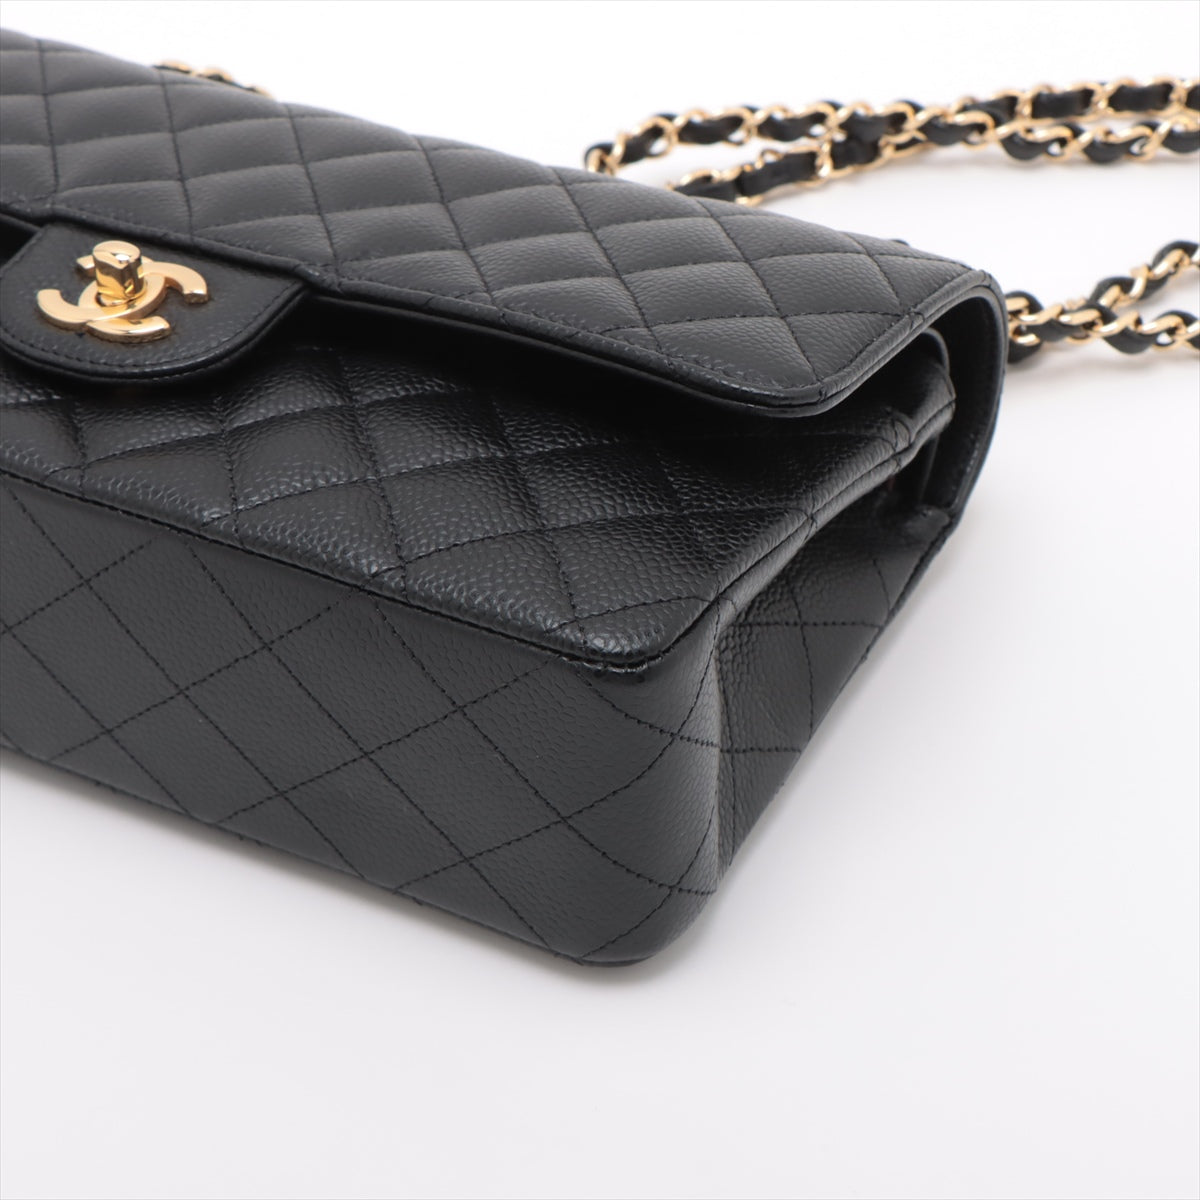 Chanel Matrasse 25 Caviar S Double Flap Double Chain Bag Black G  A01112